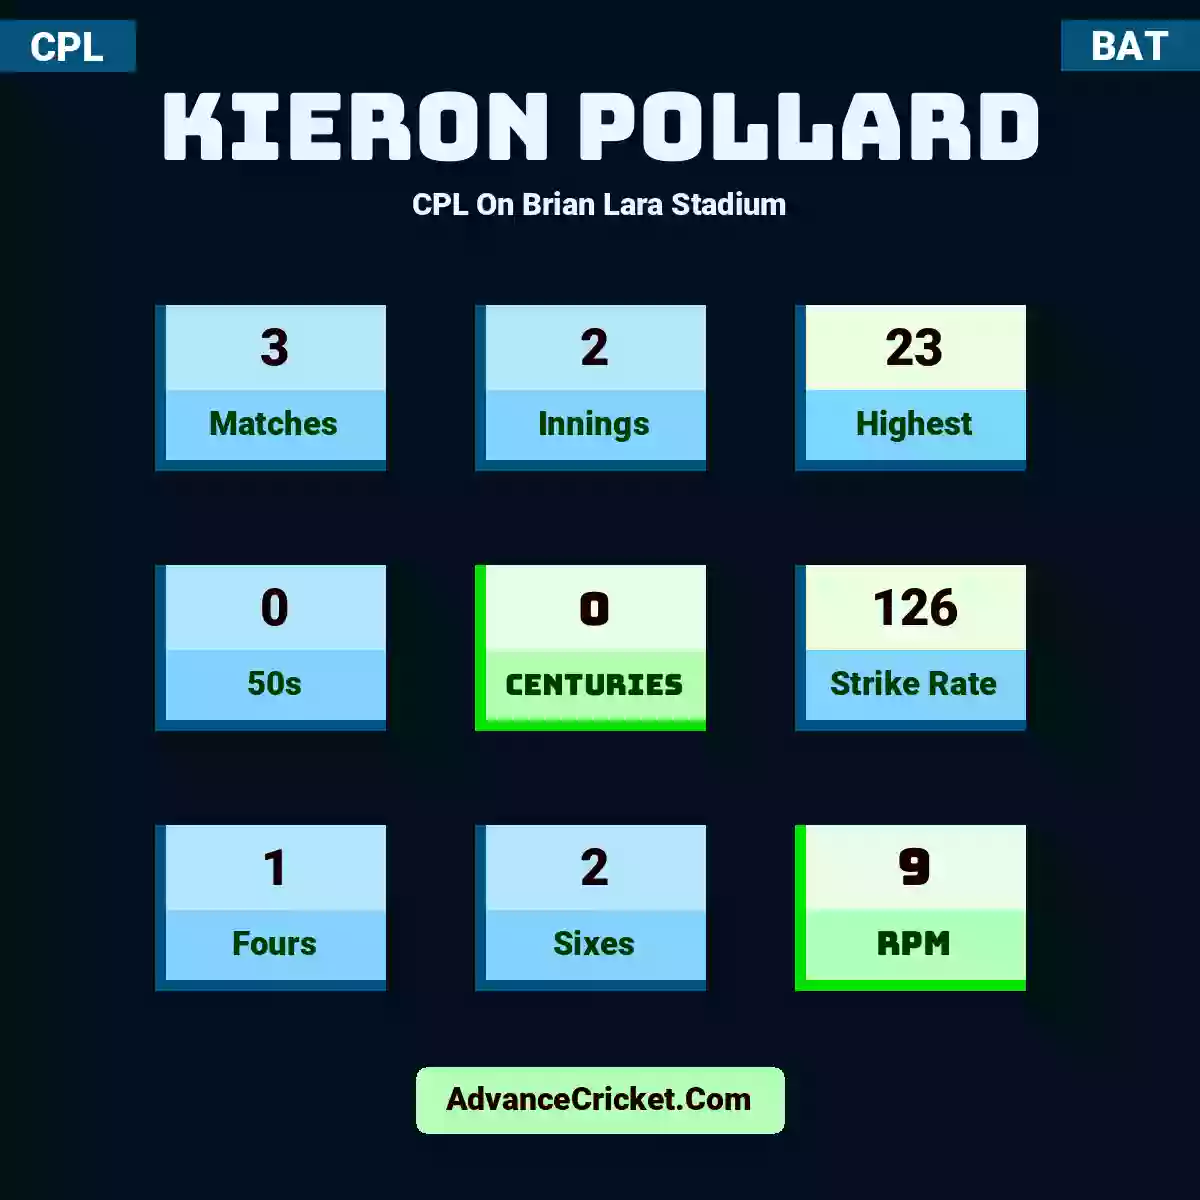 Kieron Pollard CPL  On Brian Lara Stadium, Kieron Pollard played 3 matches, scored 23 runs as highest, 0 half-centuries, and 0 centuries, with a strike rate of 126. K.Pollard hit 1 fours and 2 sixes, with an RPM of 9.